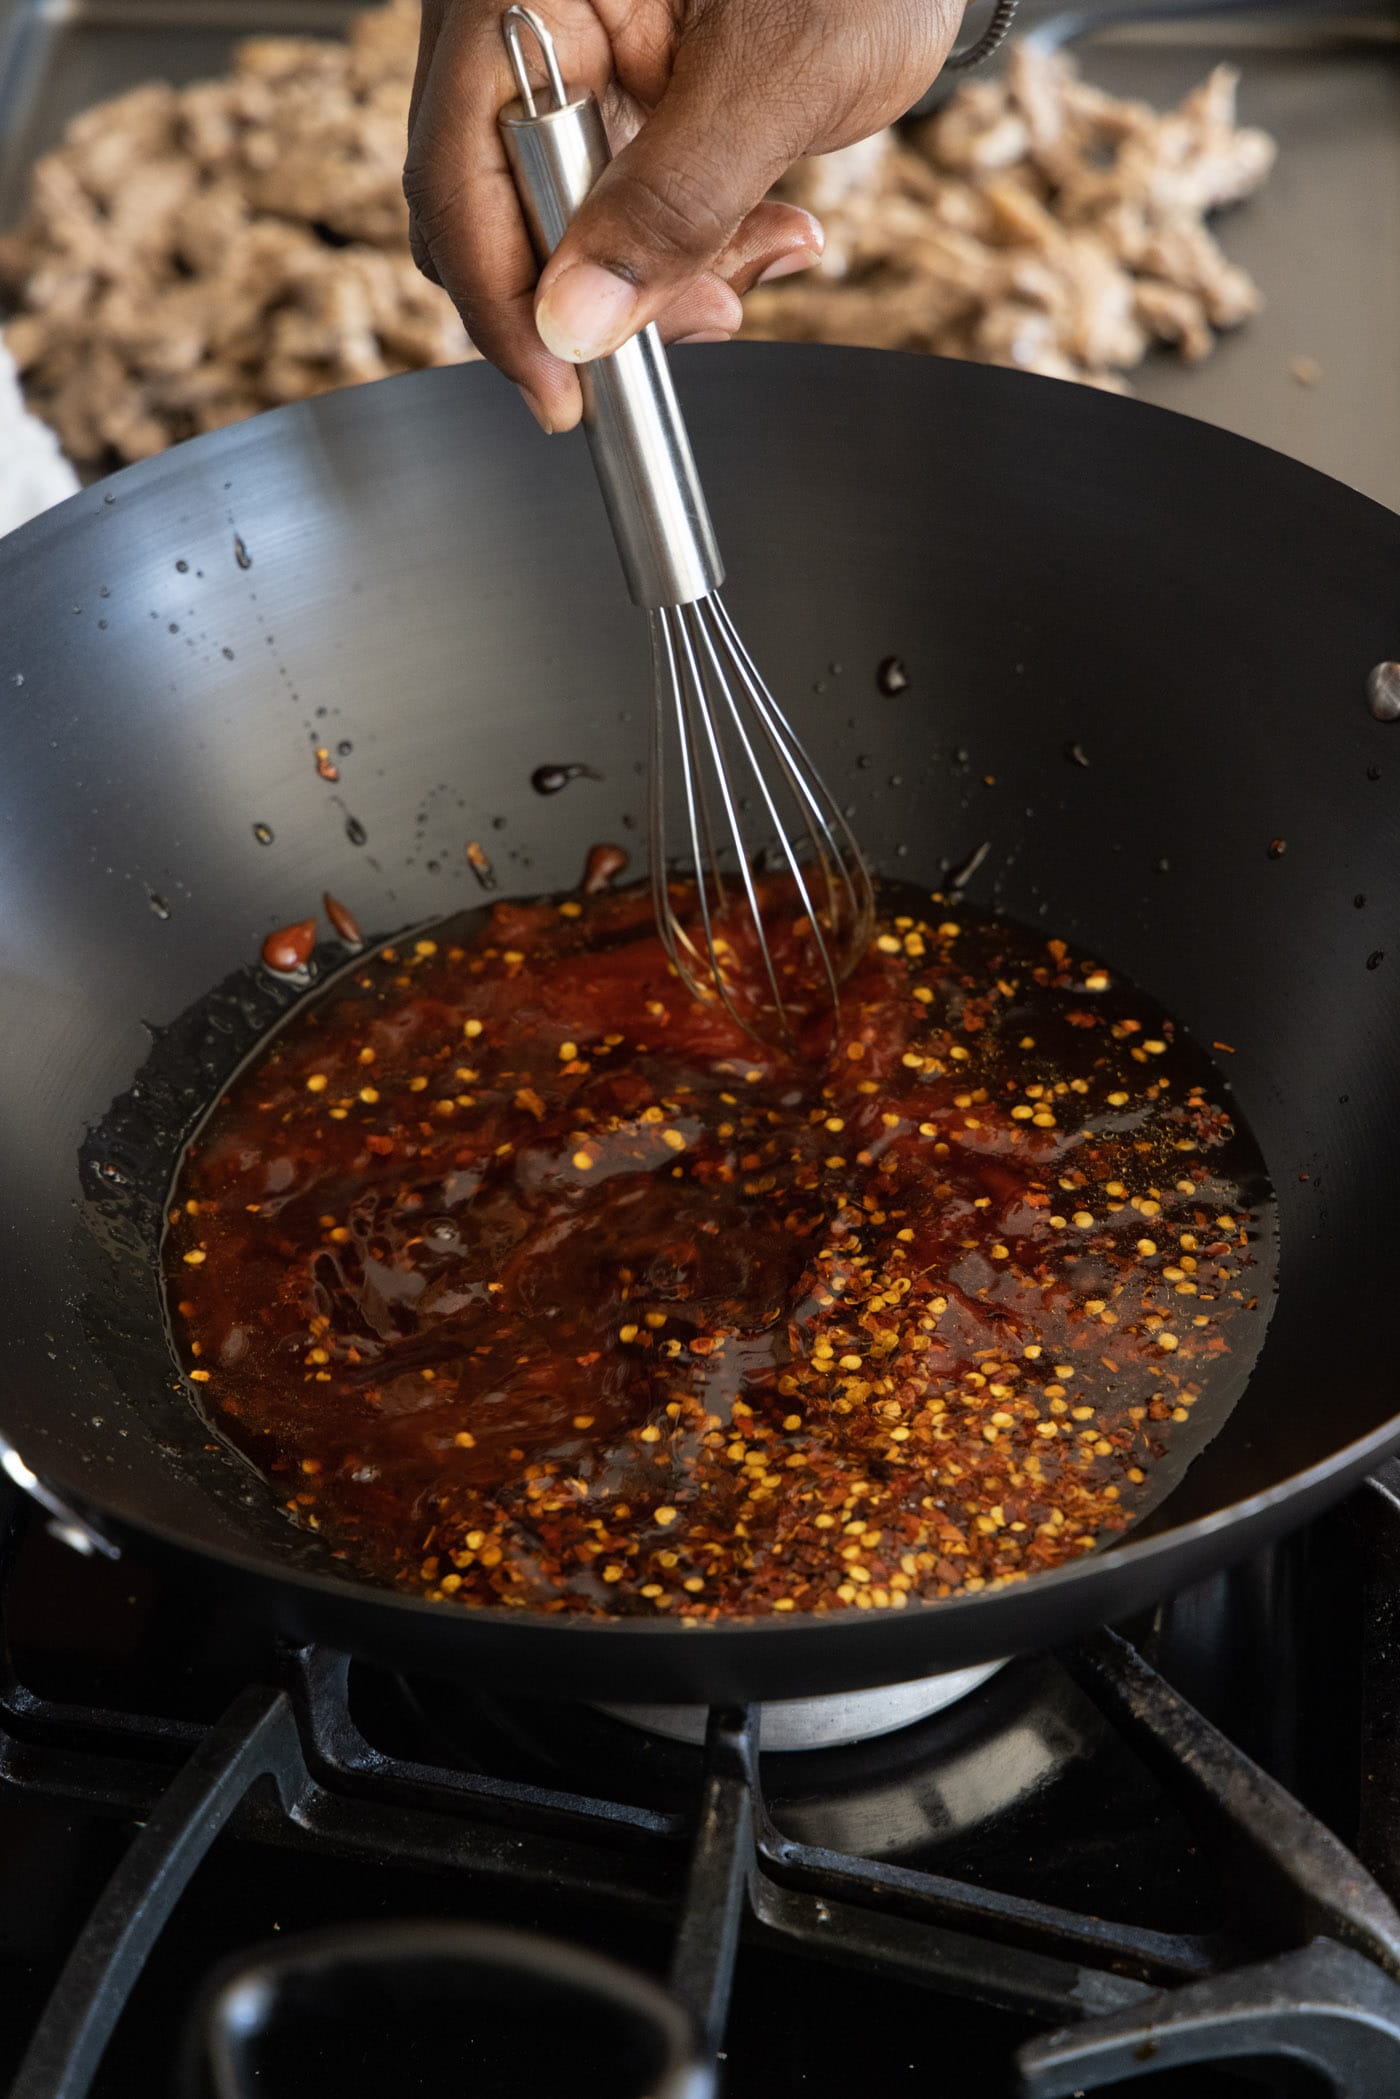 whisking beijing beef sauce in a wok